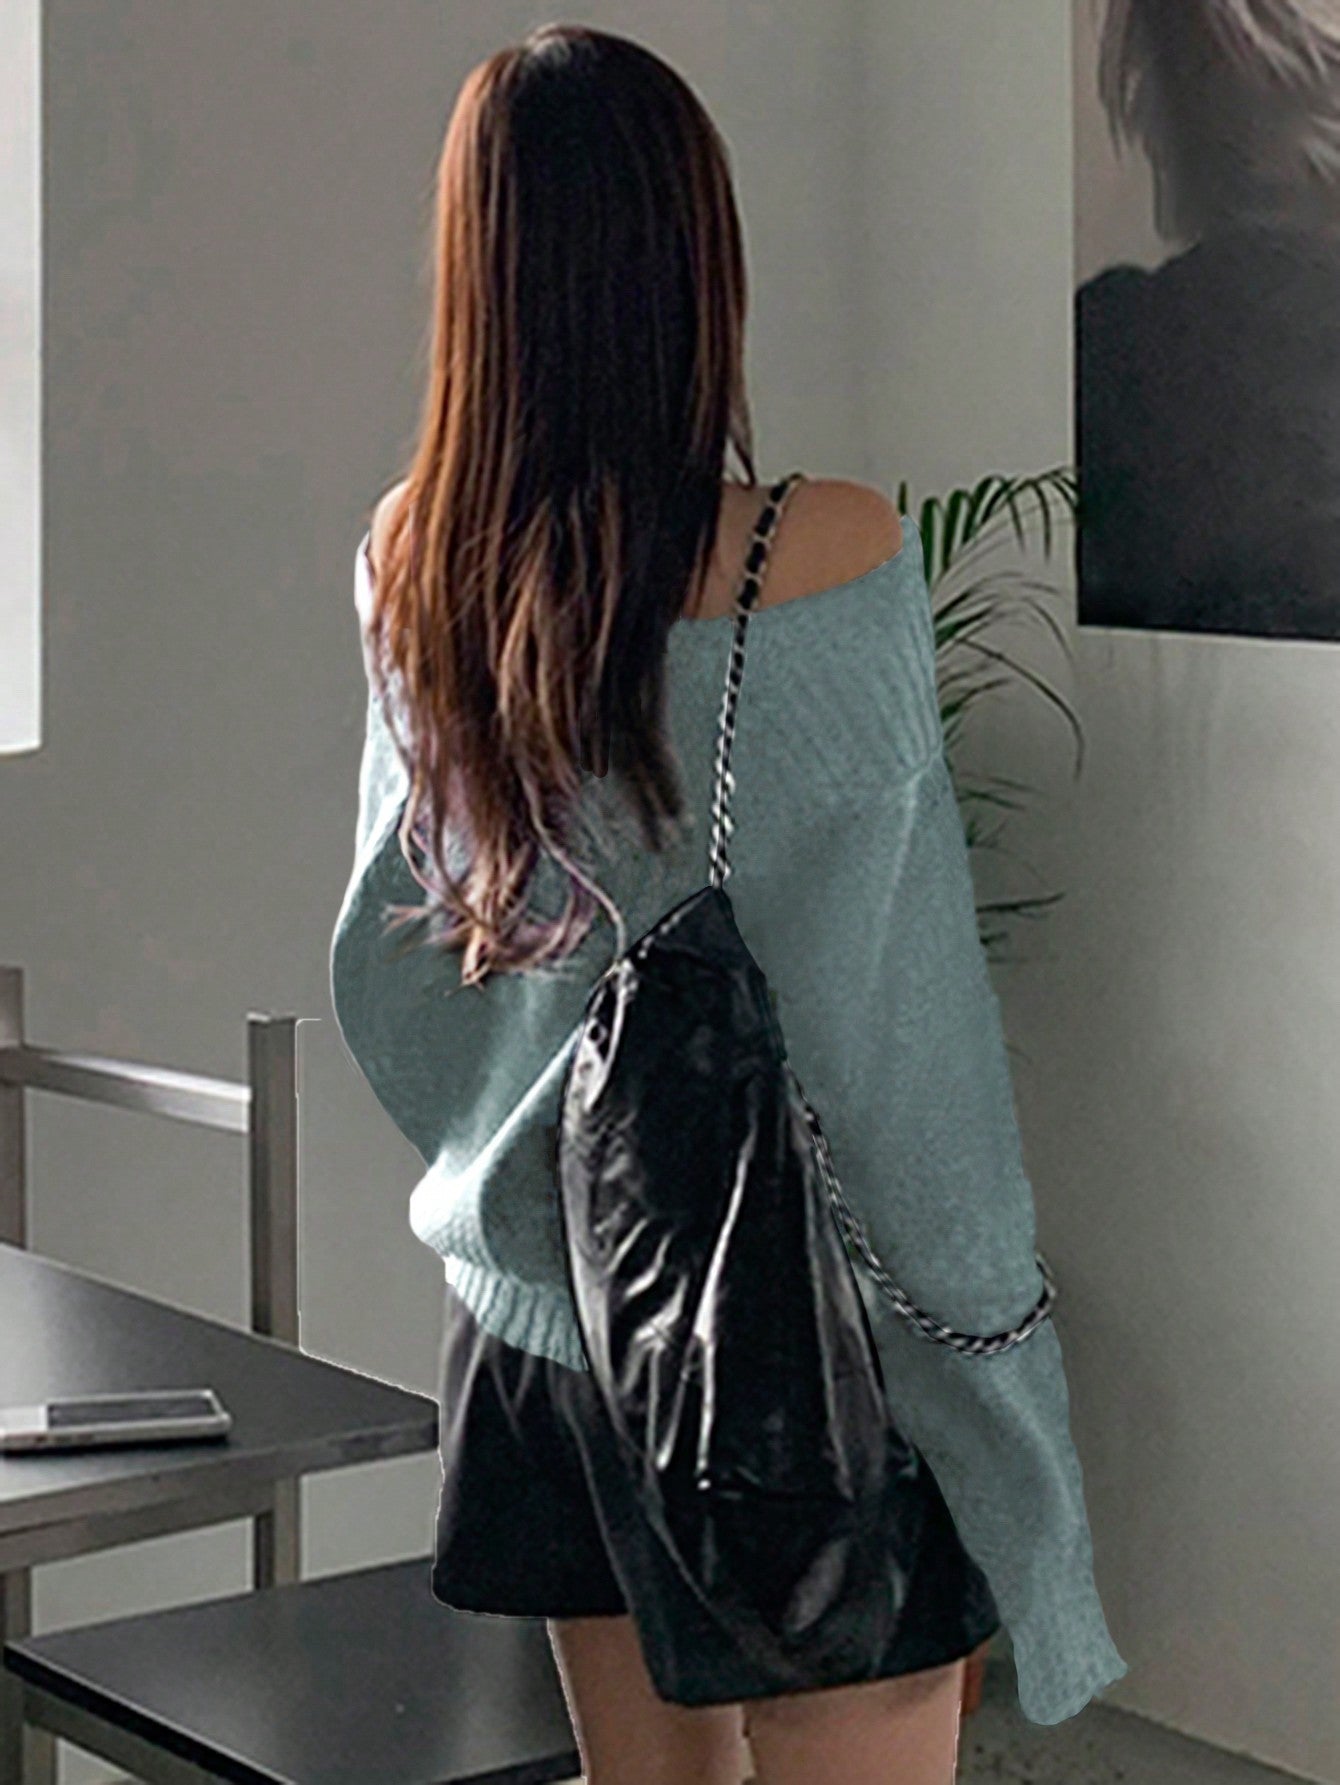 DAZY Ladies Solid Color Off-Shoulder Casual Sweater